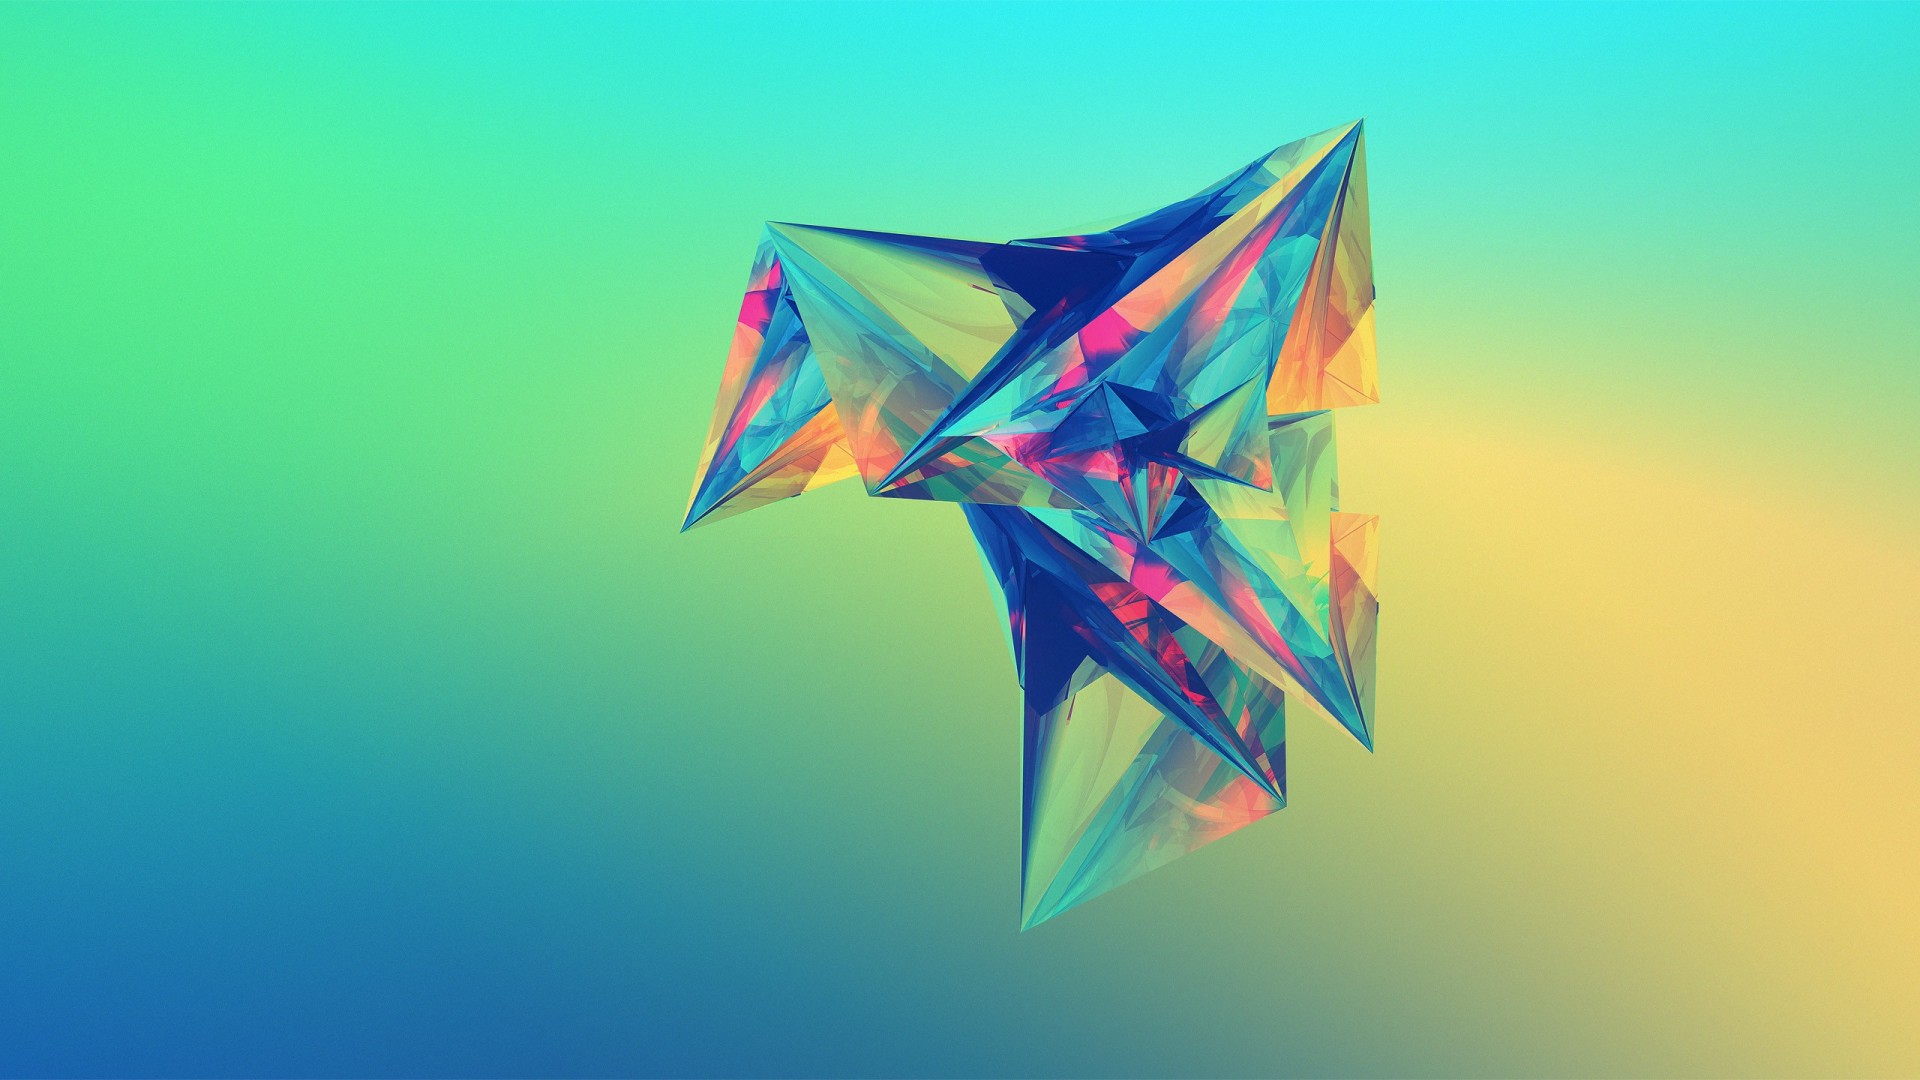 полигон, 4k, HD, цветной, зеленый, polygon, 4k, HD wallpaper, green, orange, blue, background (horizontal)